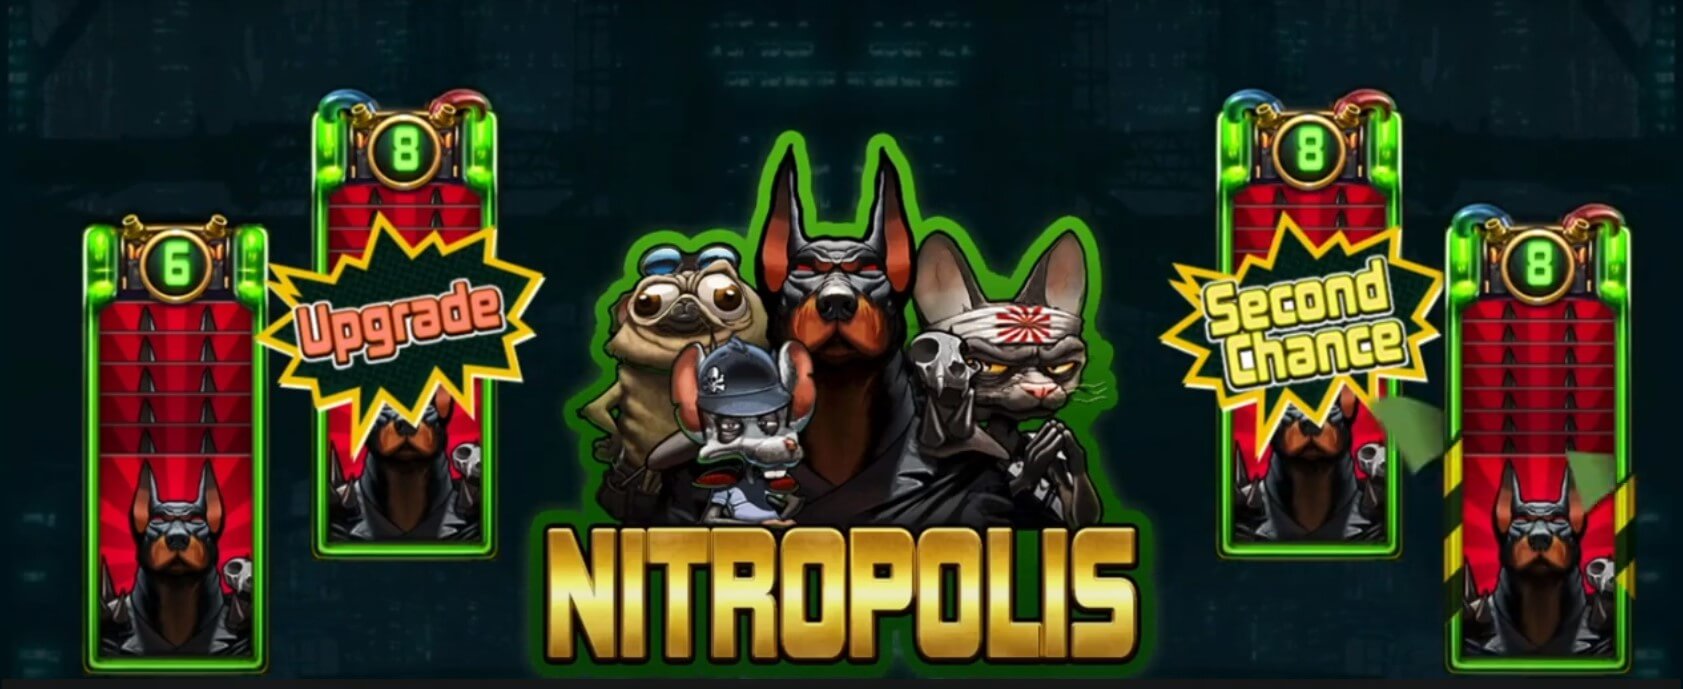 Nitropolis Spielautomaten Bewertung, Feautures